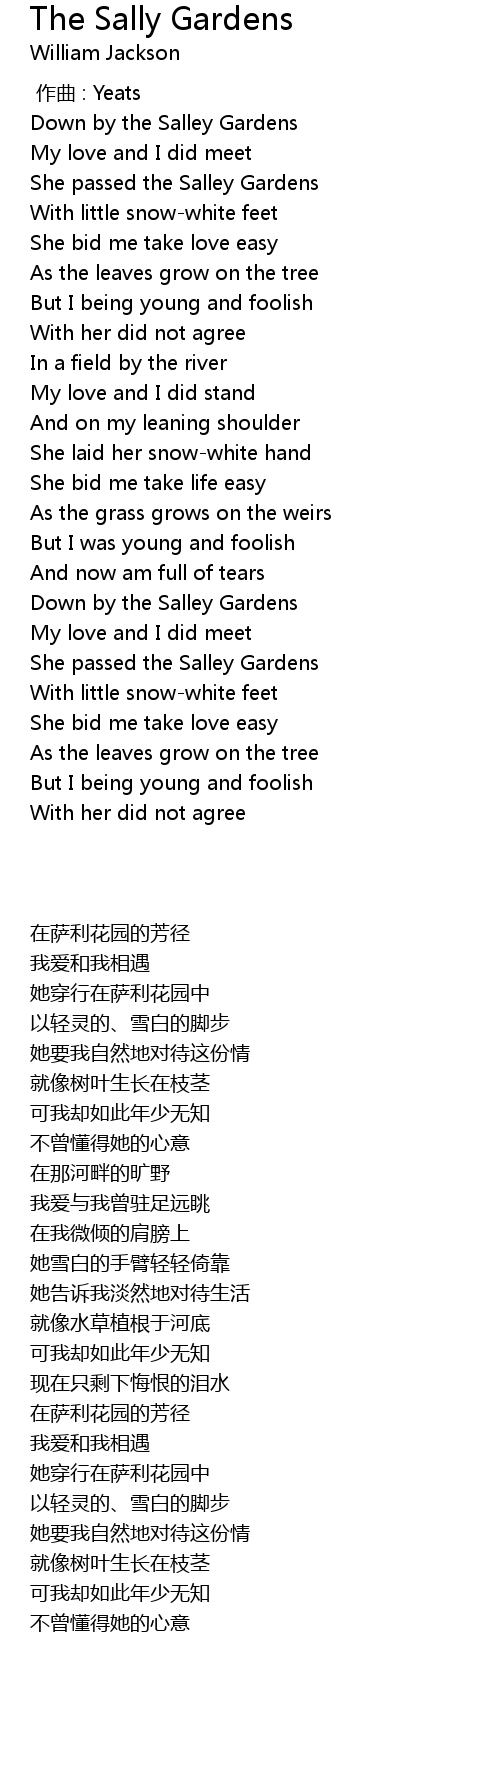 The Sally Gardens Lyrics Follow Lyrics